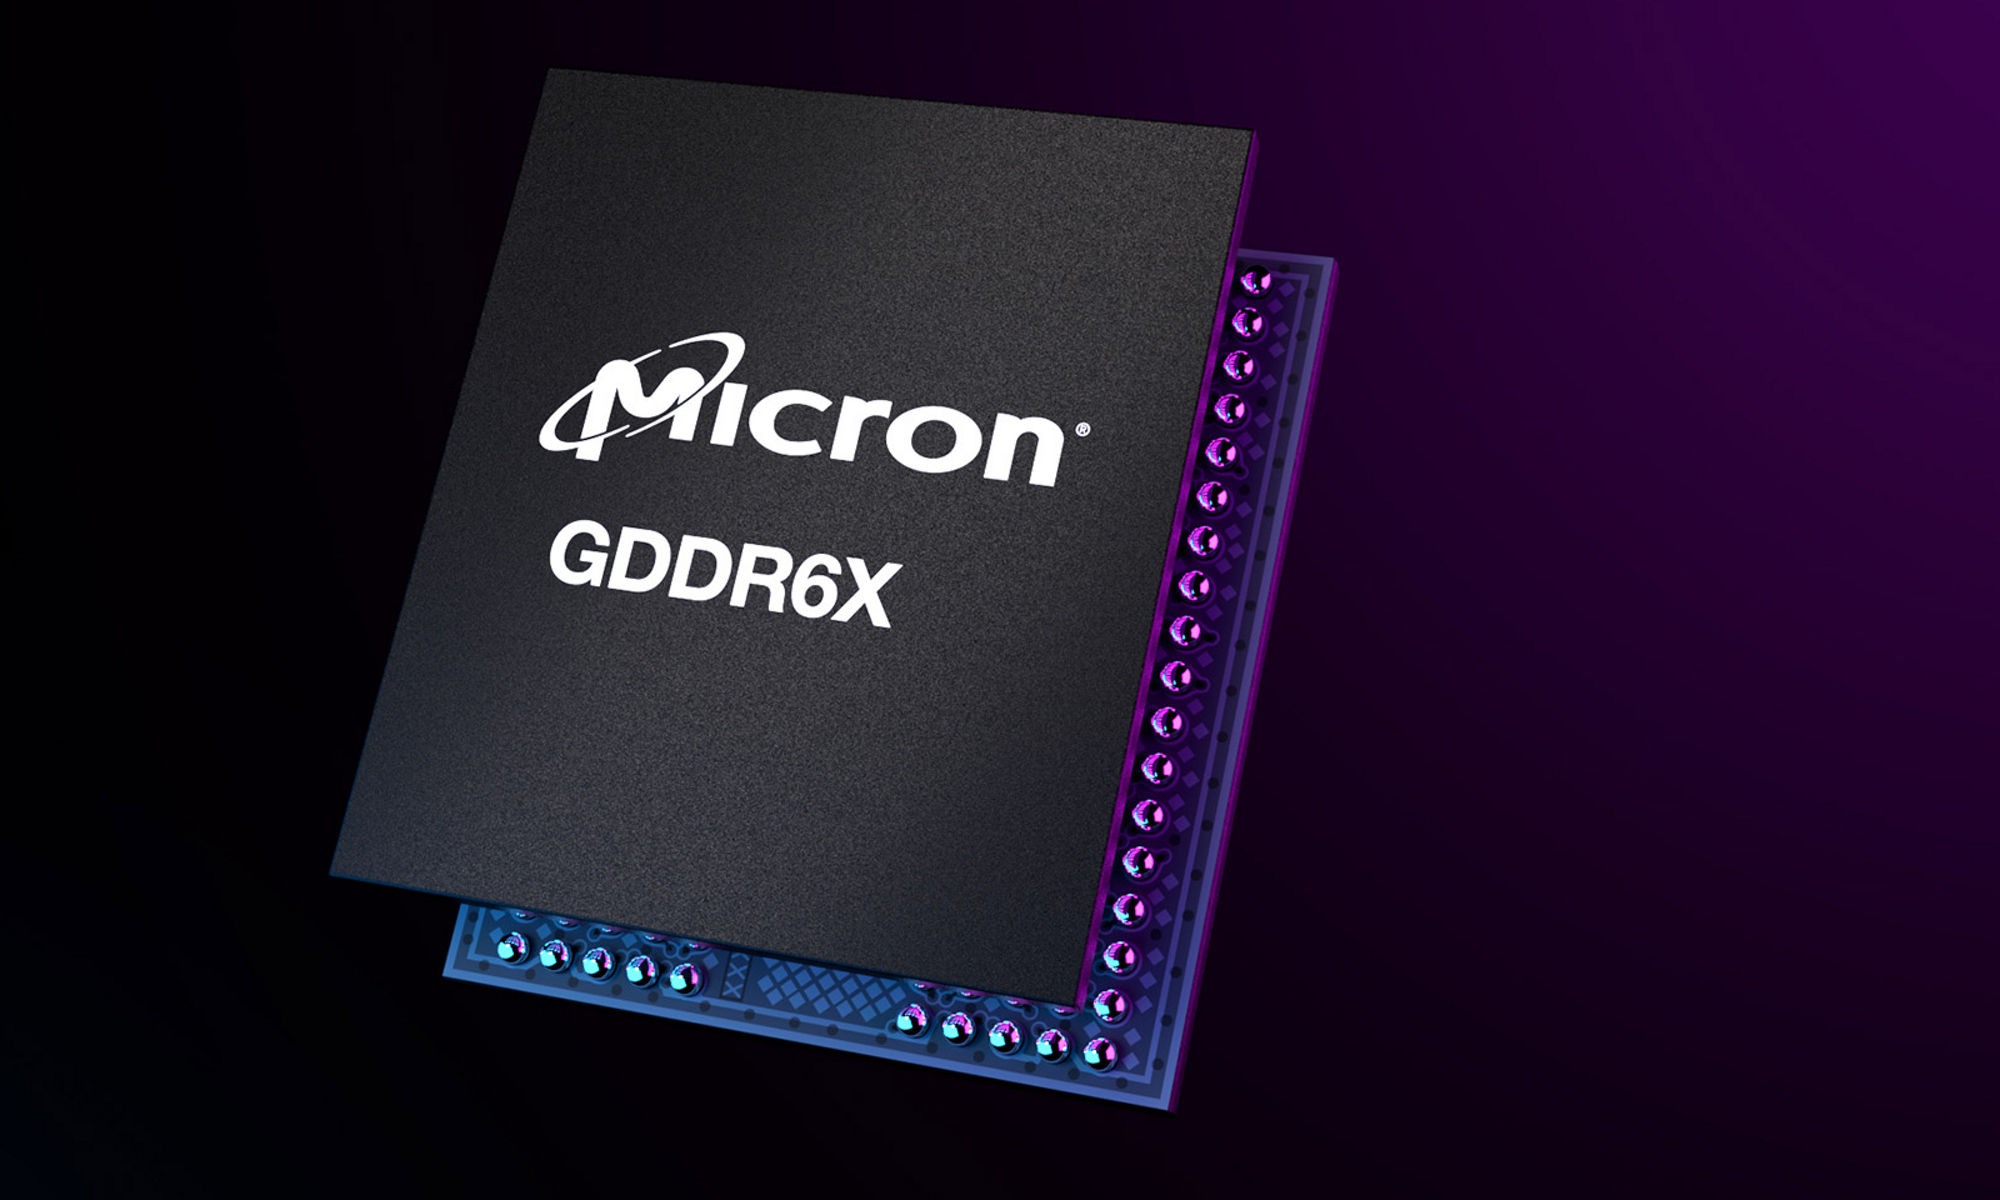 Micron GDDR6X microchip